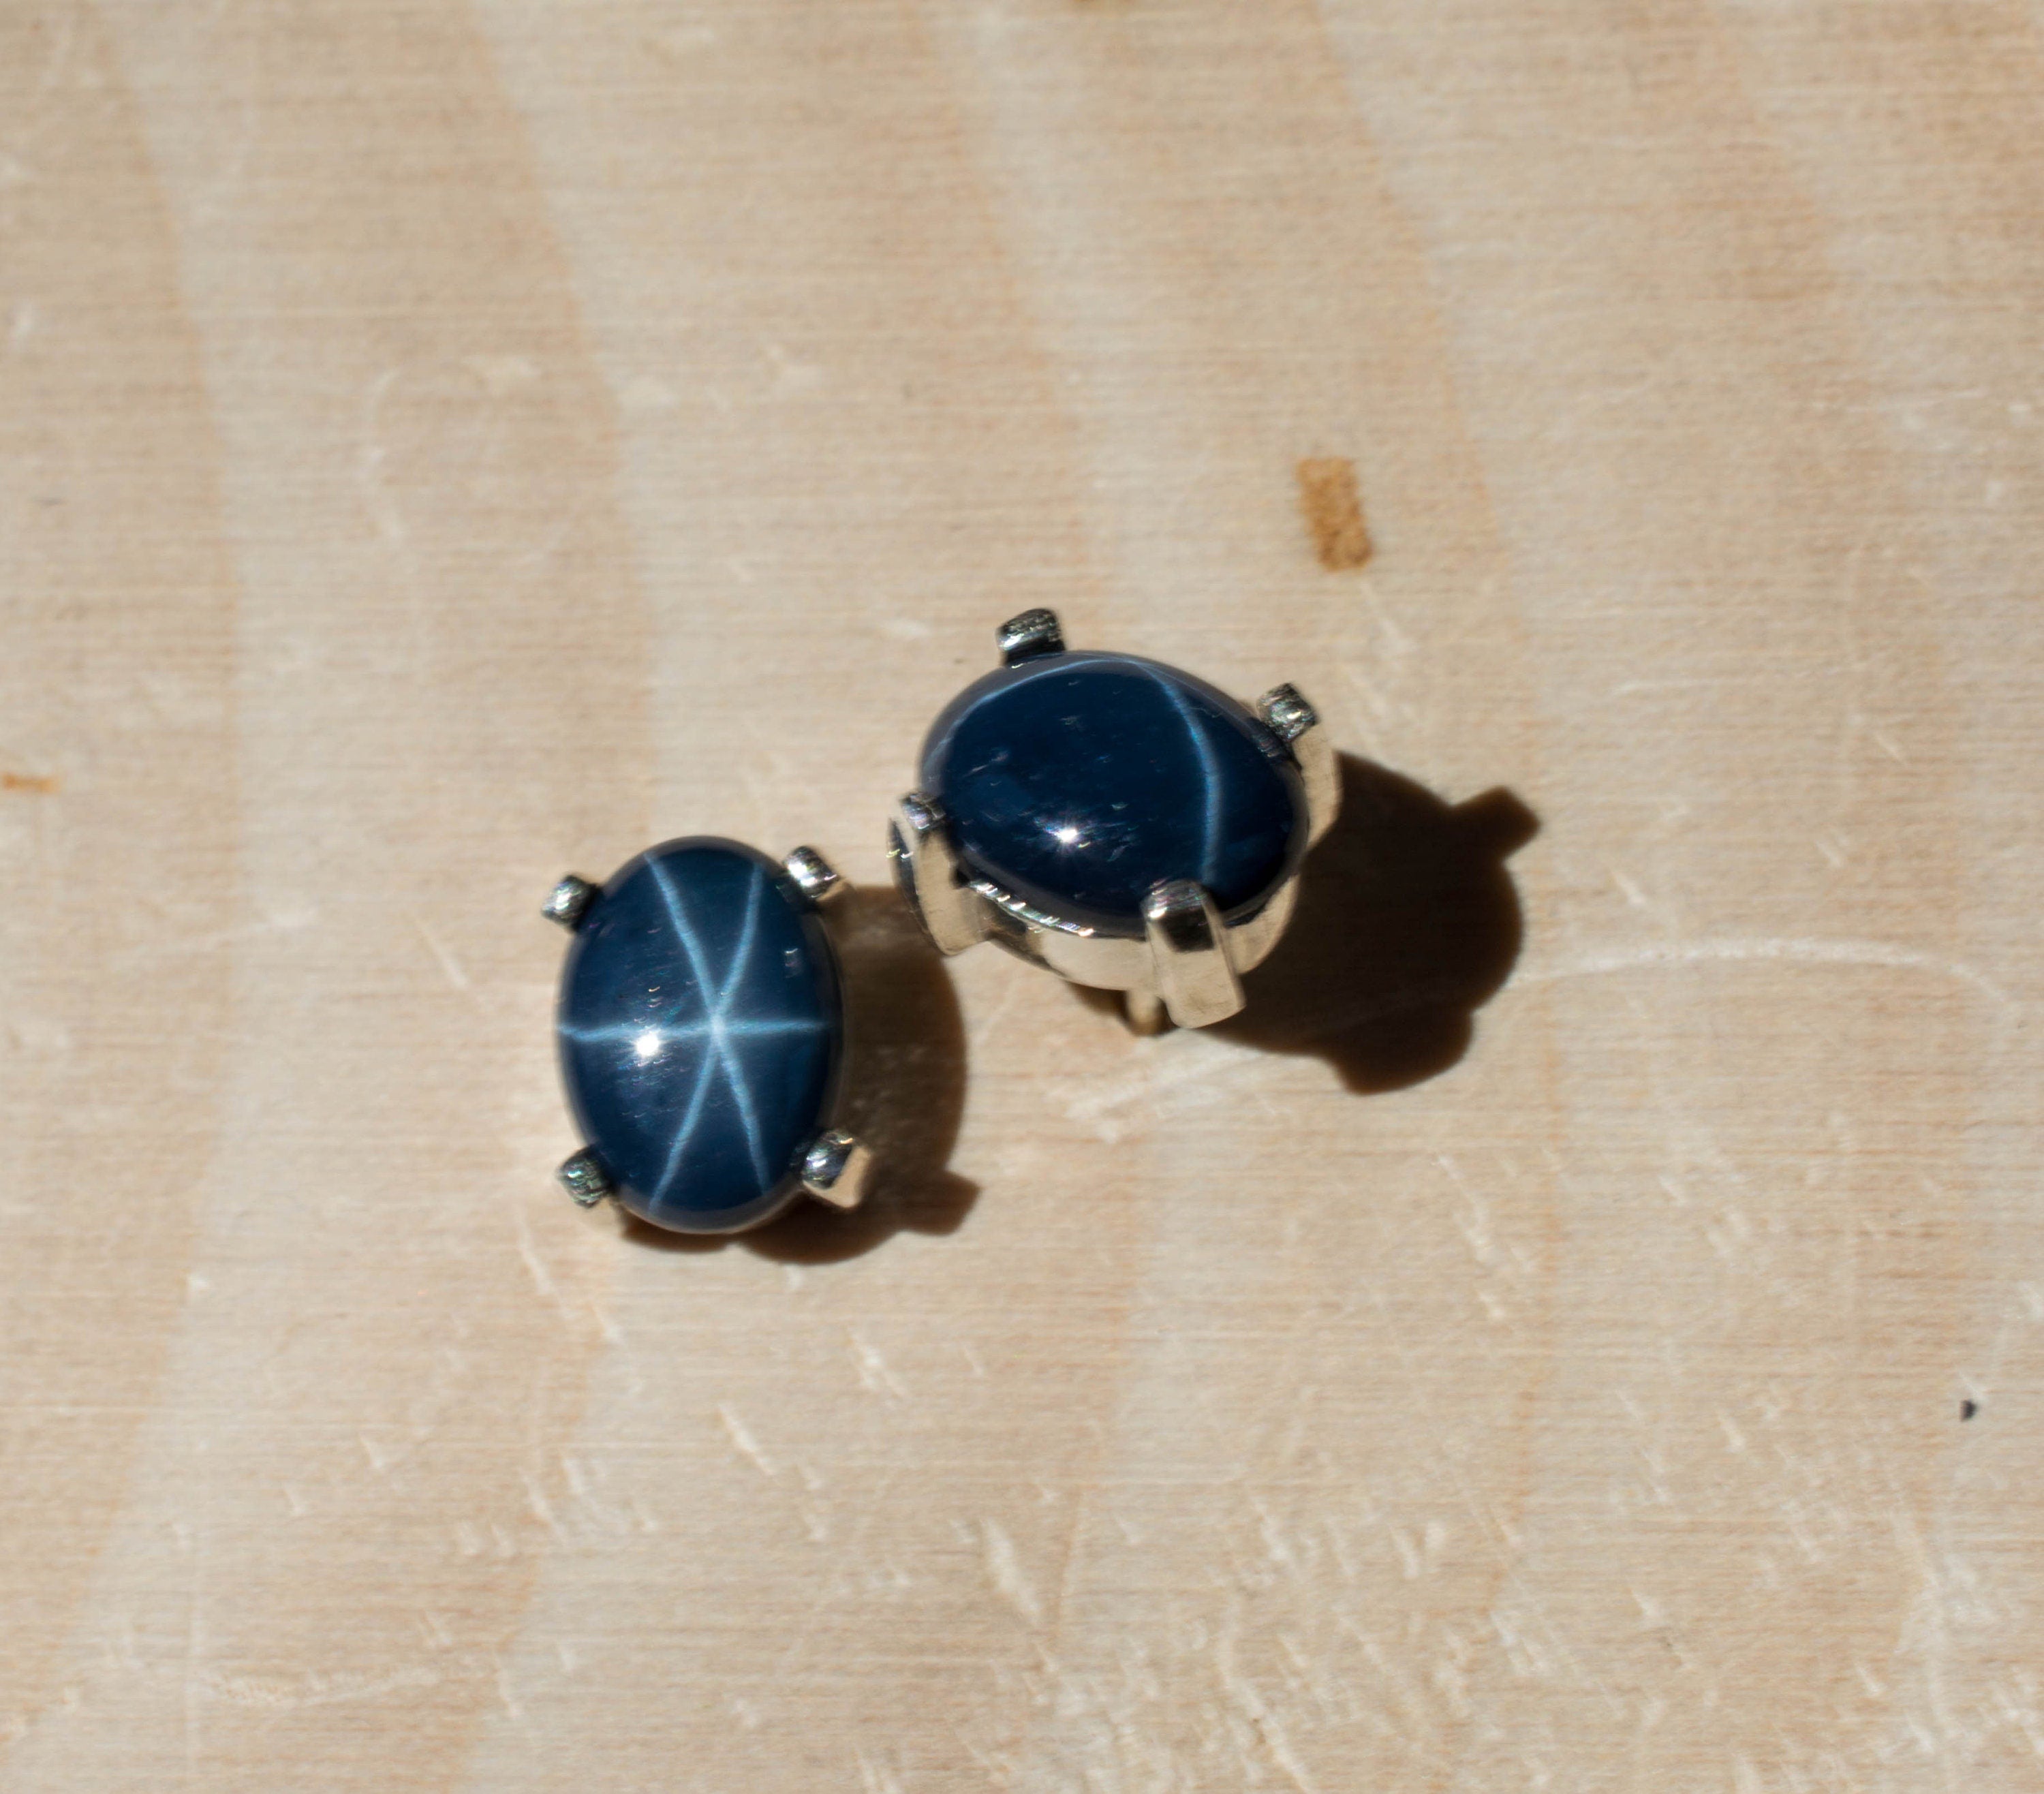 Star Sapphire Sterling Silver Earrings, Genuine Star Sapphire Gemstones - Mark Oliver Gems